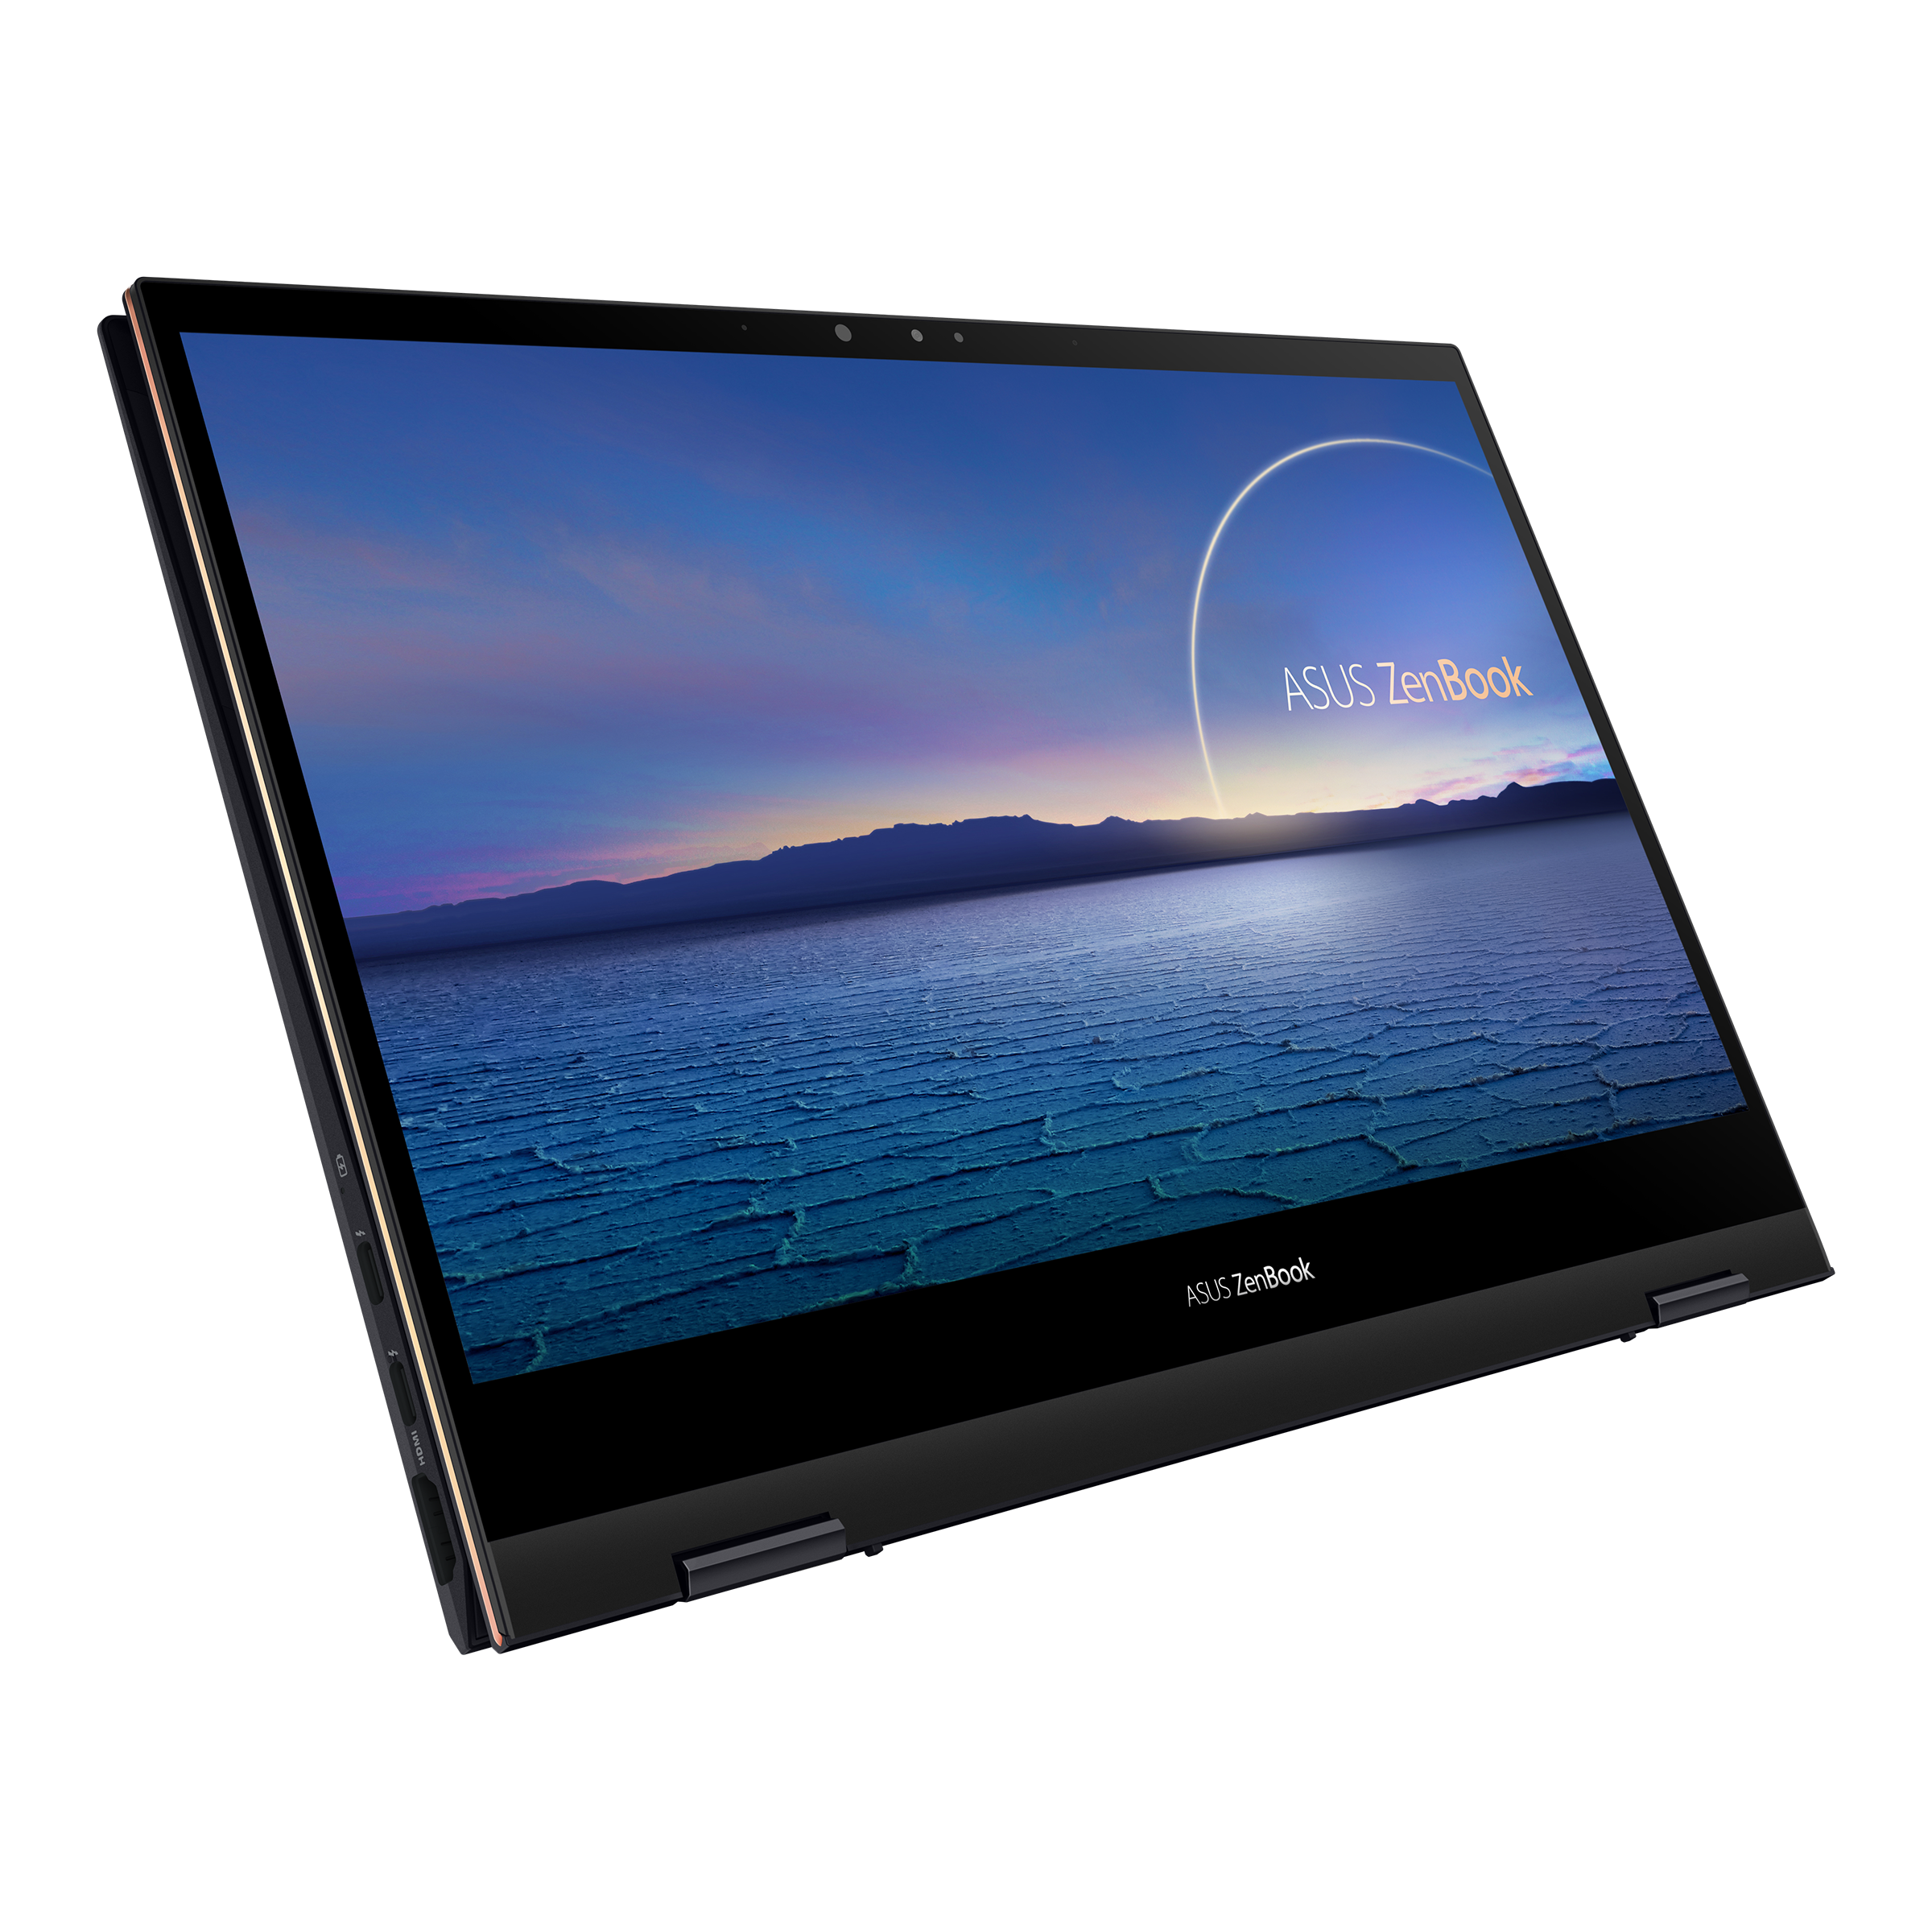 New Asus Zenbook S13 Wedges 13th Gen Intel, OLED Screen Into